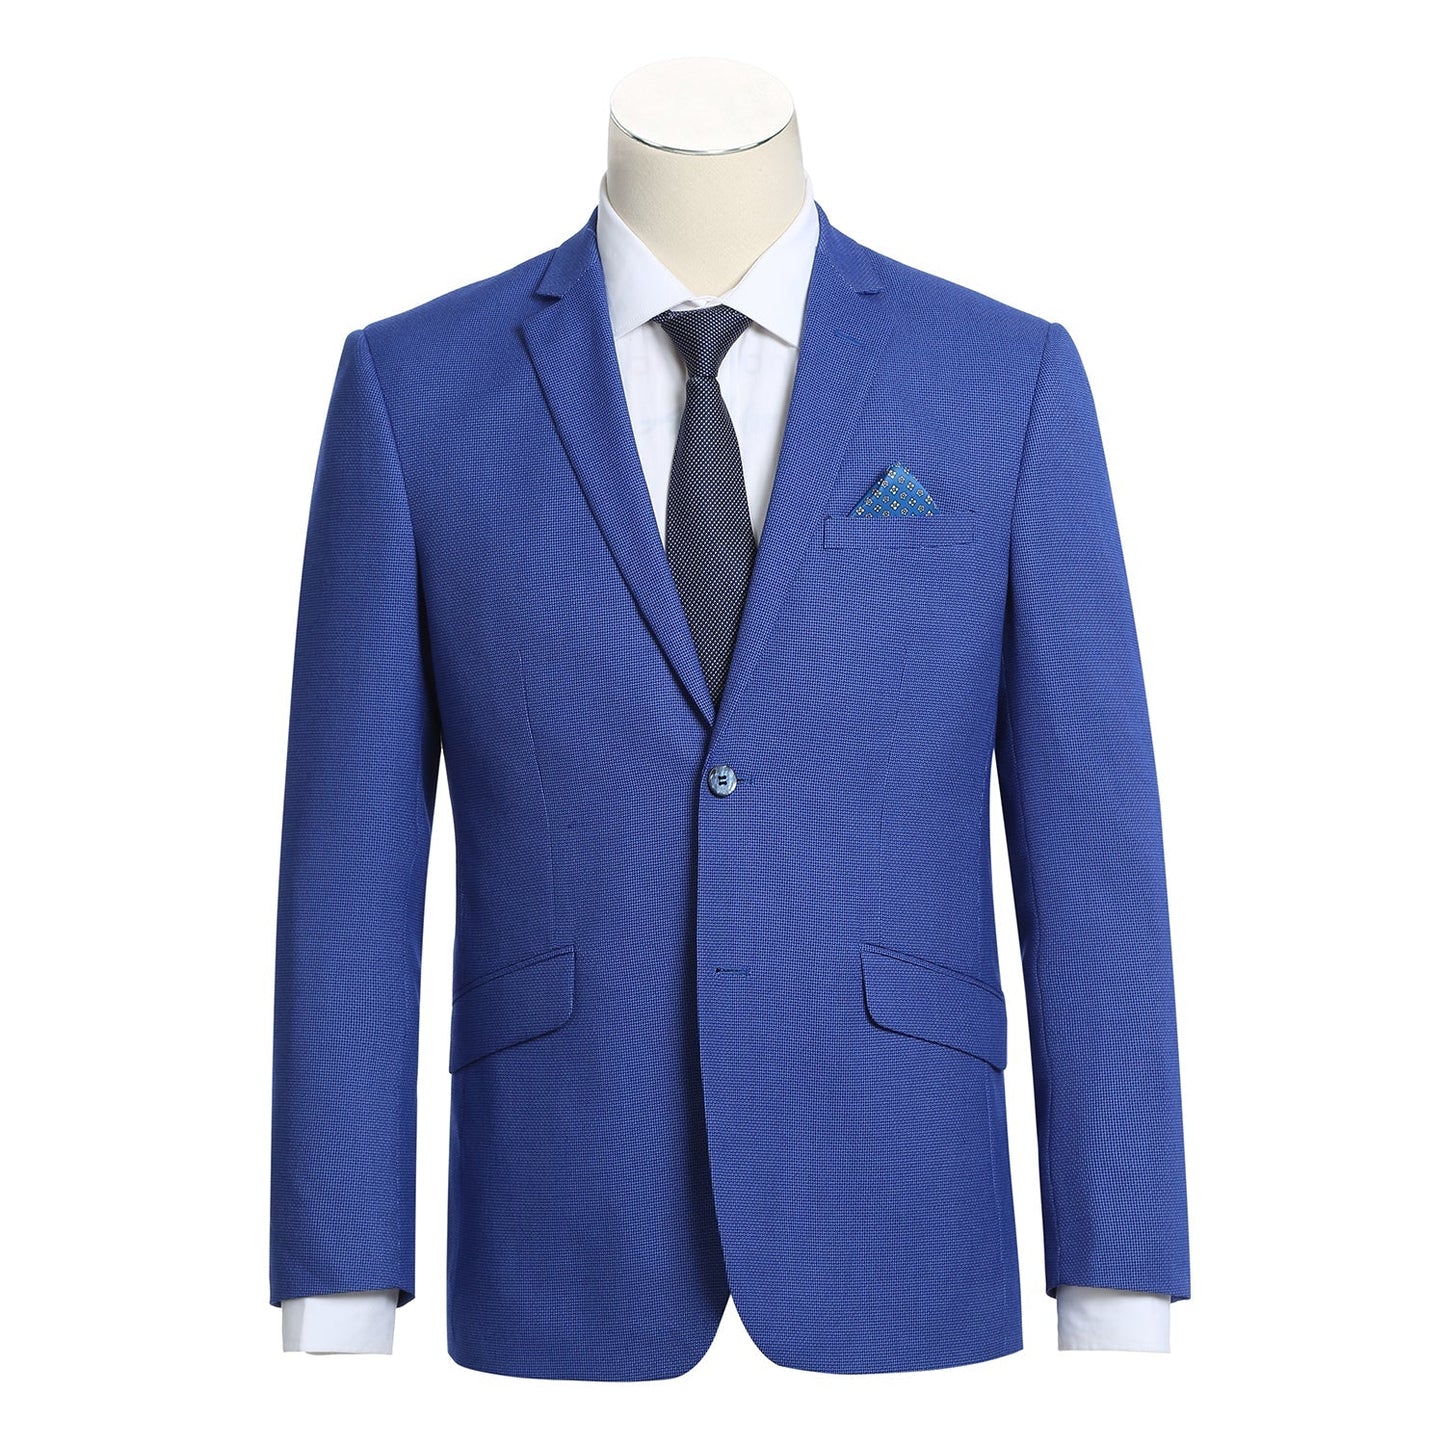 294-14 Men's Vibrant Blue Slim Fit Sport Coat